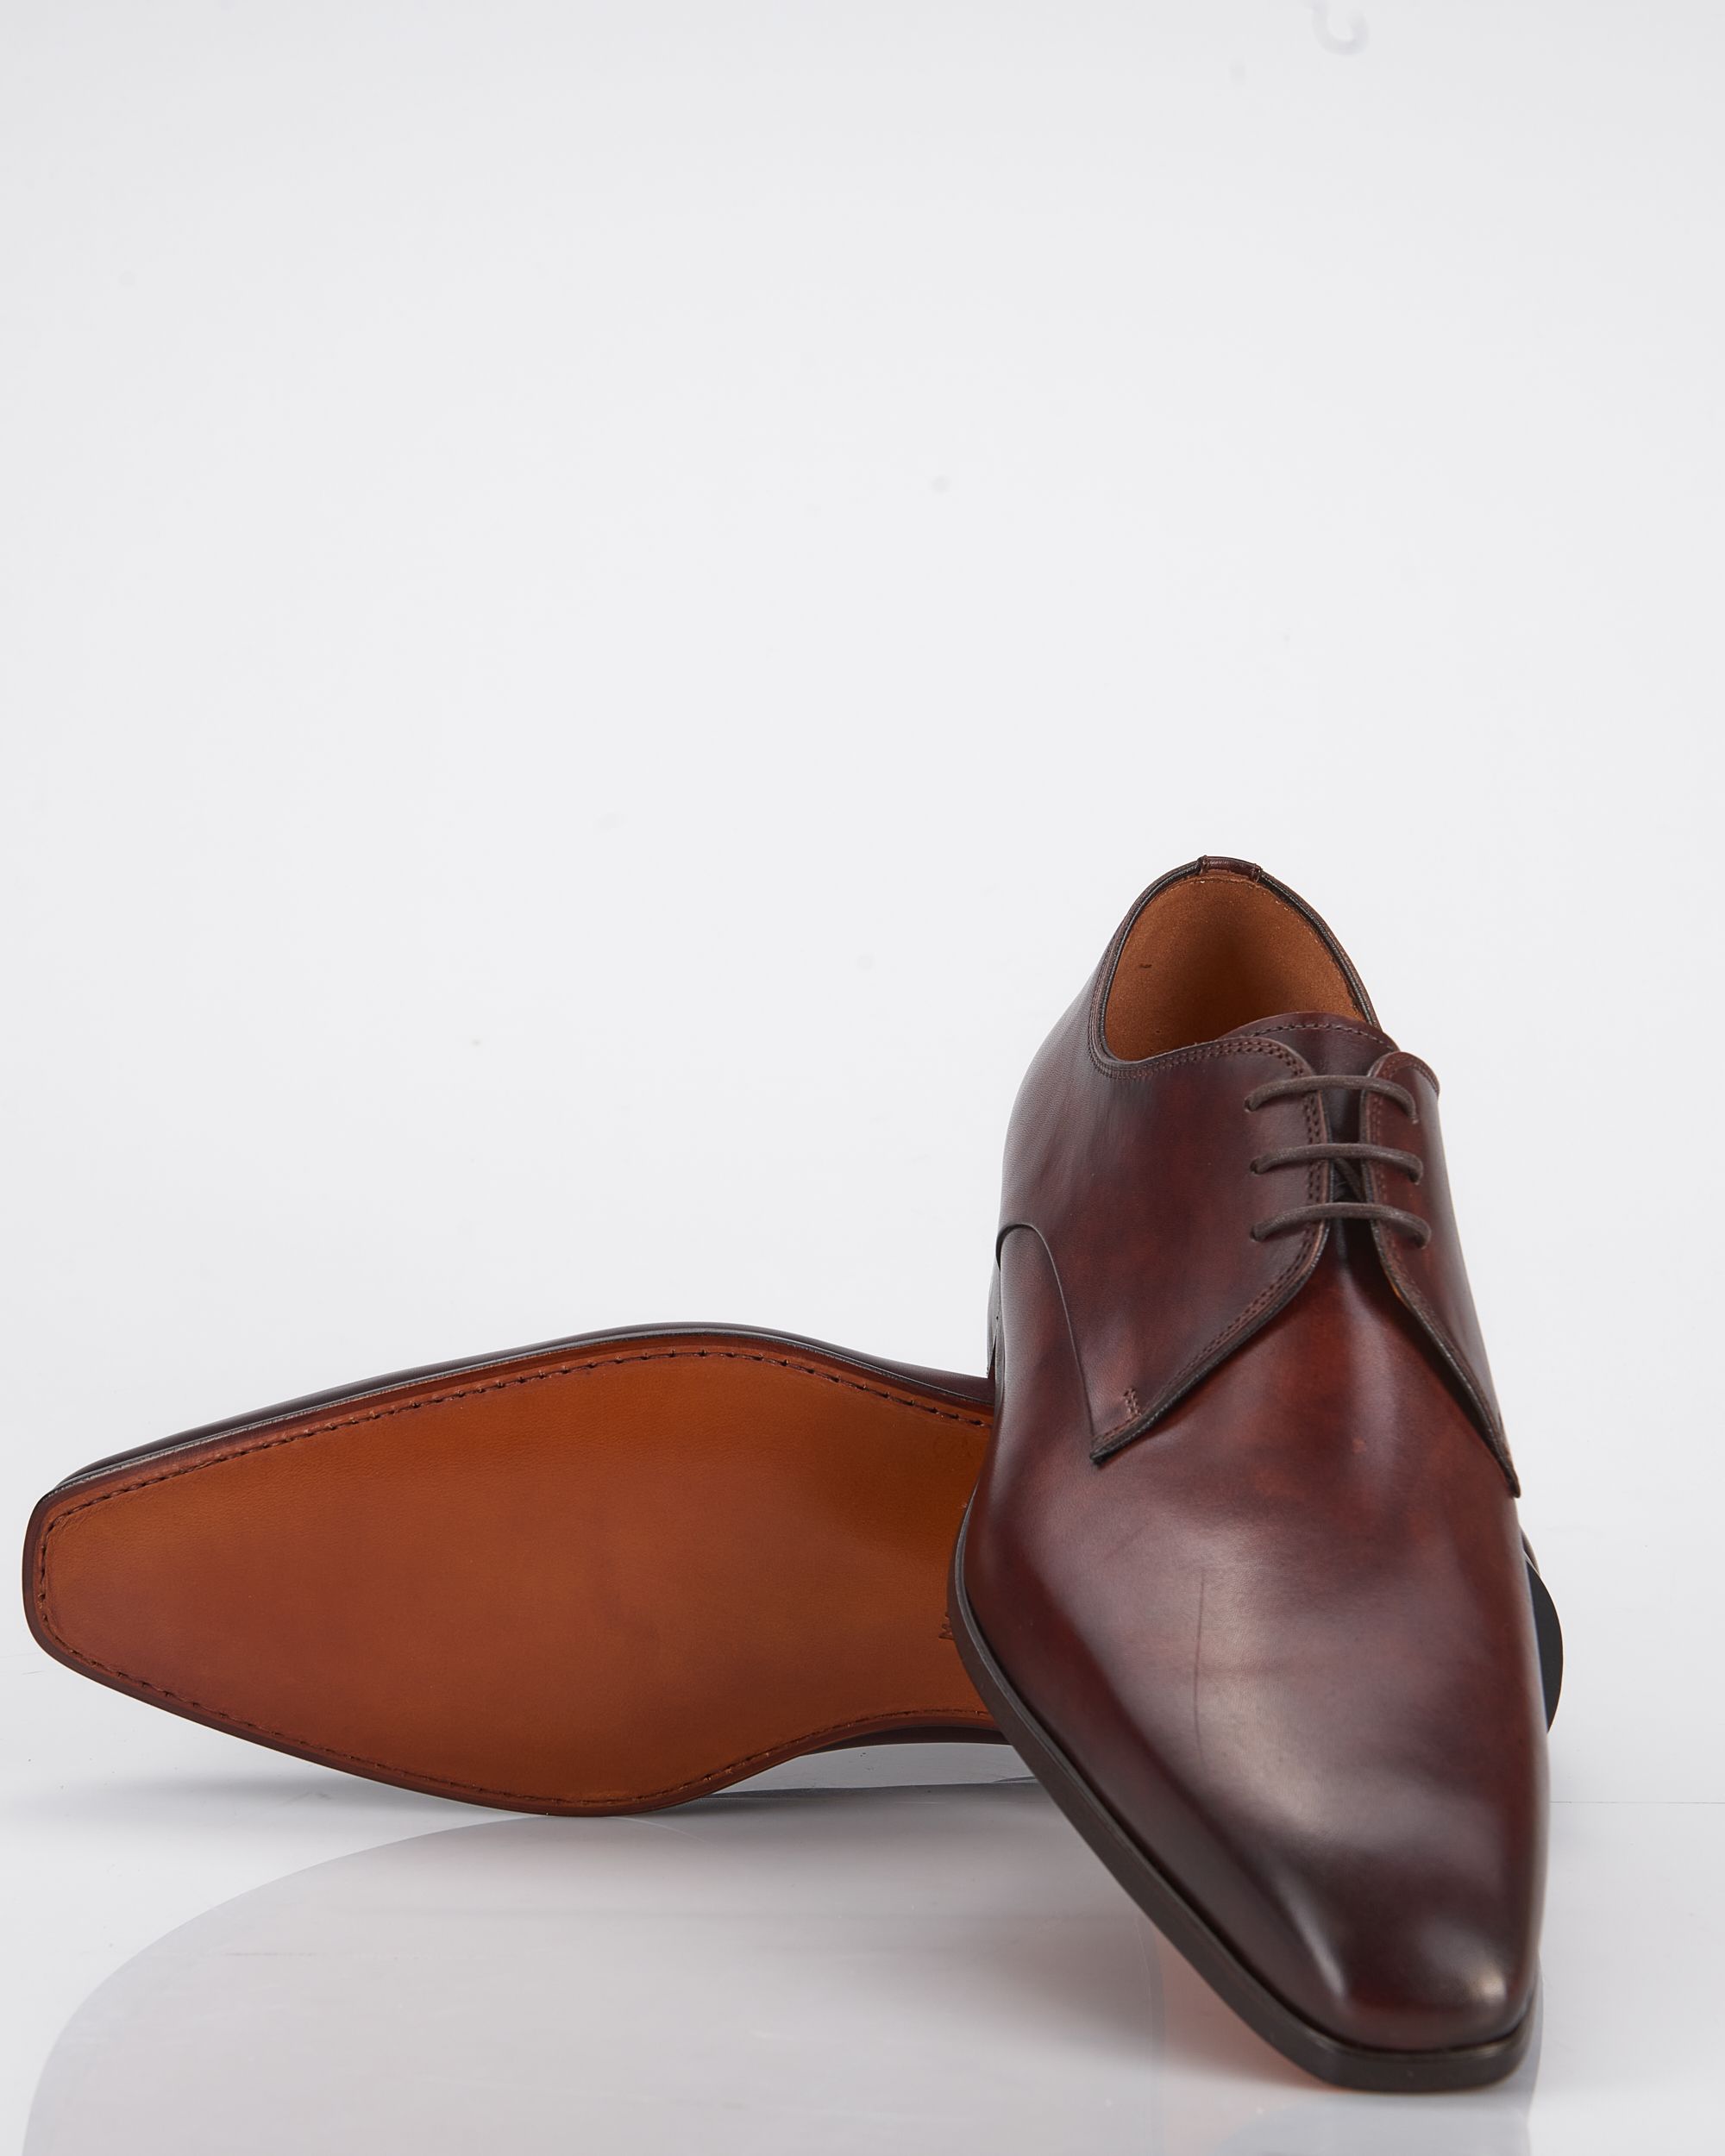 Magnanni Geklede schoenen Donker bruin 084907-001-41